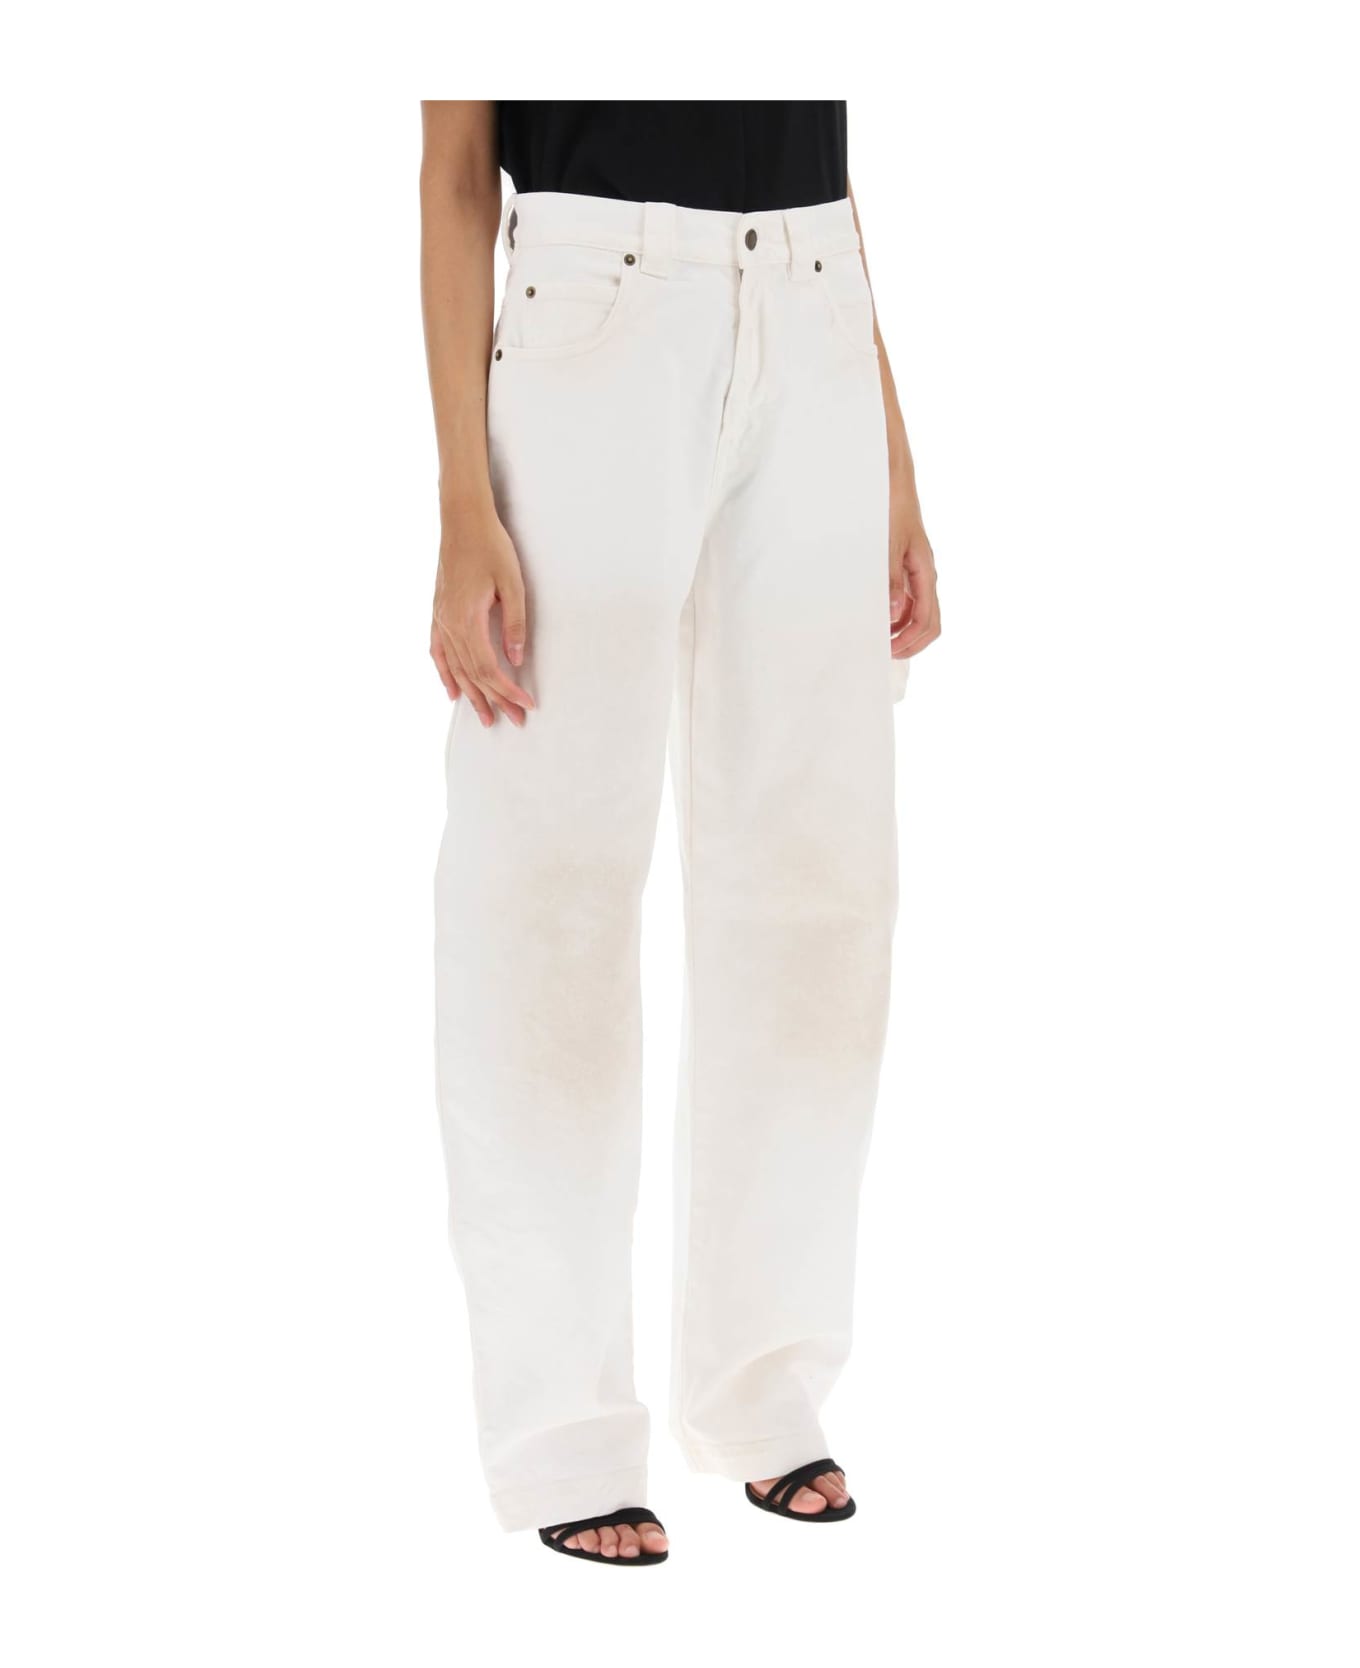 DARKPARK 'audrey' Cargo Jeans - DIRTY WHITE (White)